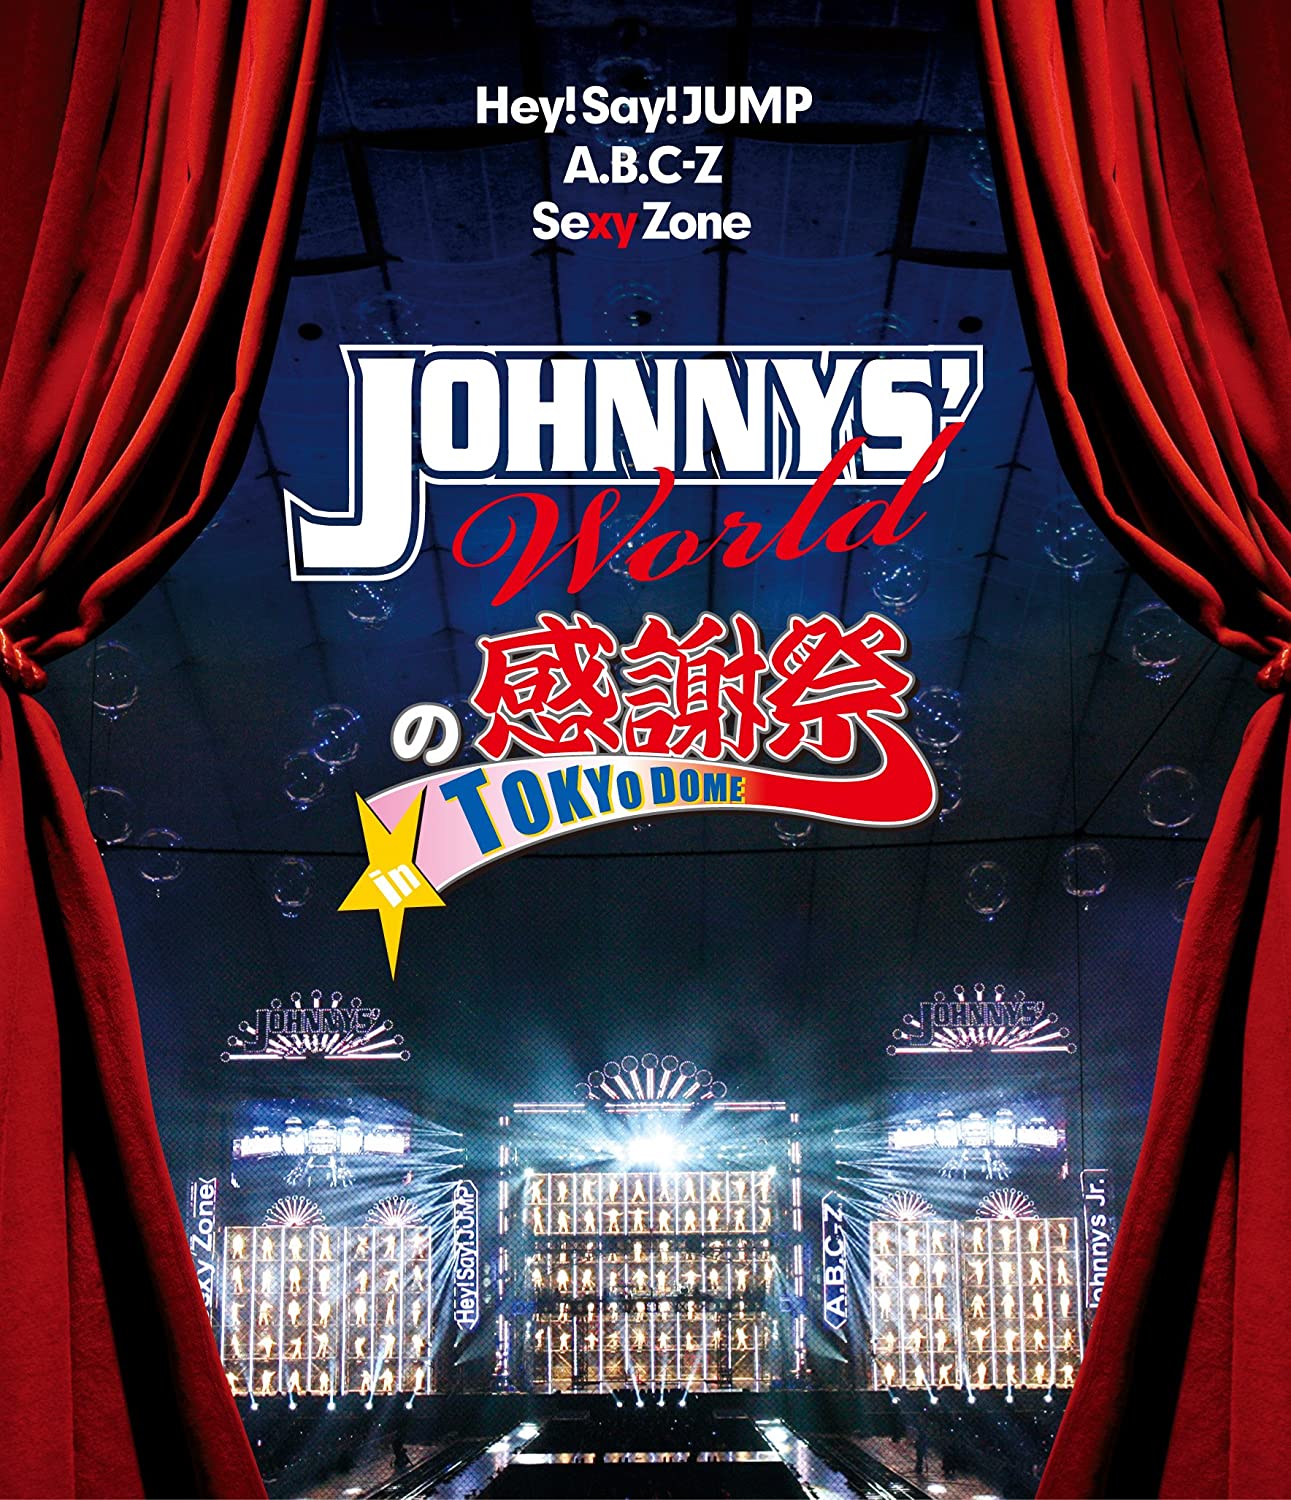 JOHNNYS' World no Kanshasai in TOKYO DOME | Jpop Wiki | Fandom